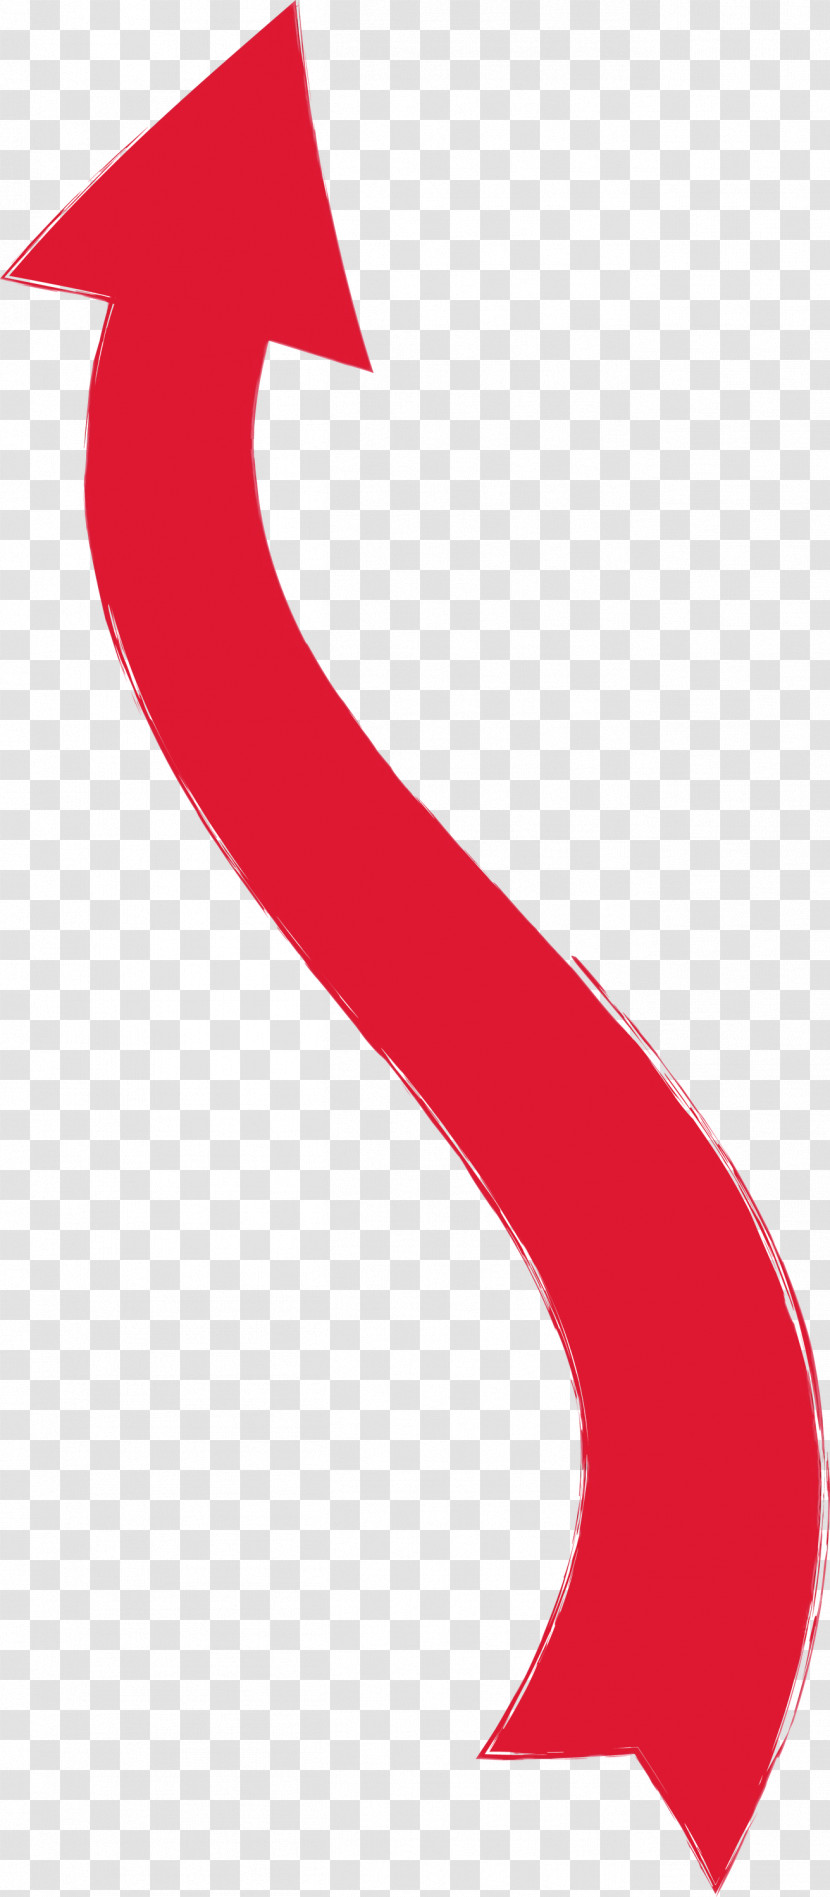 Red Material Property Symbol Transparent PNG